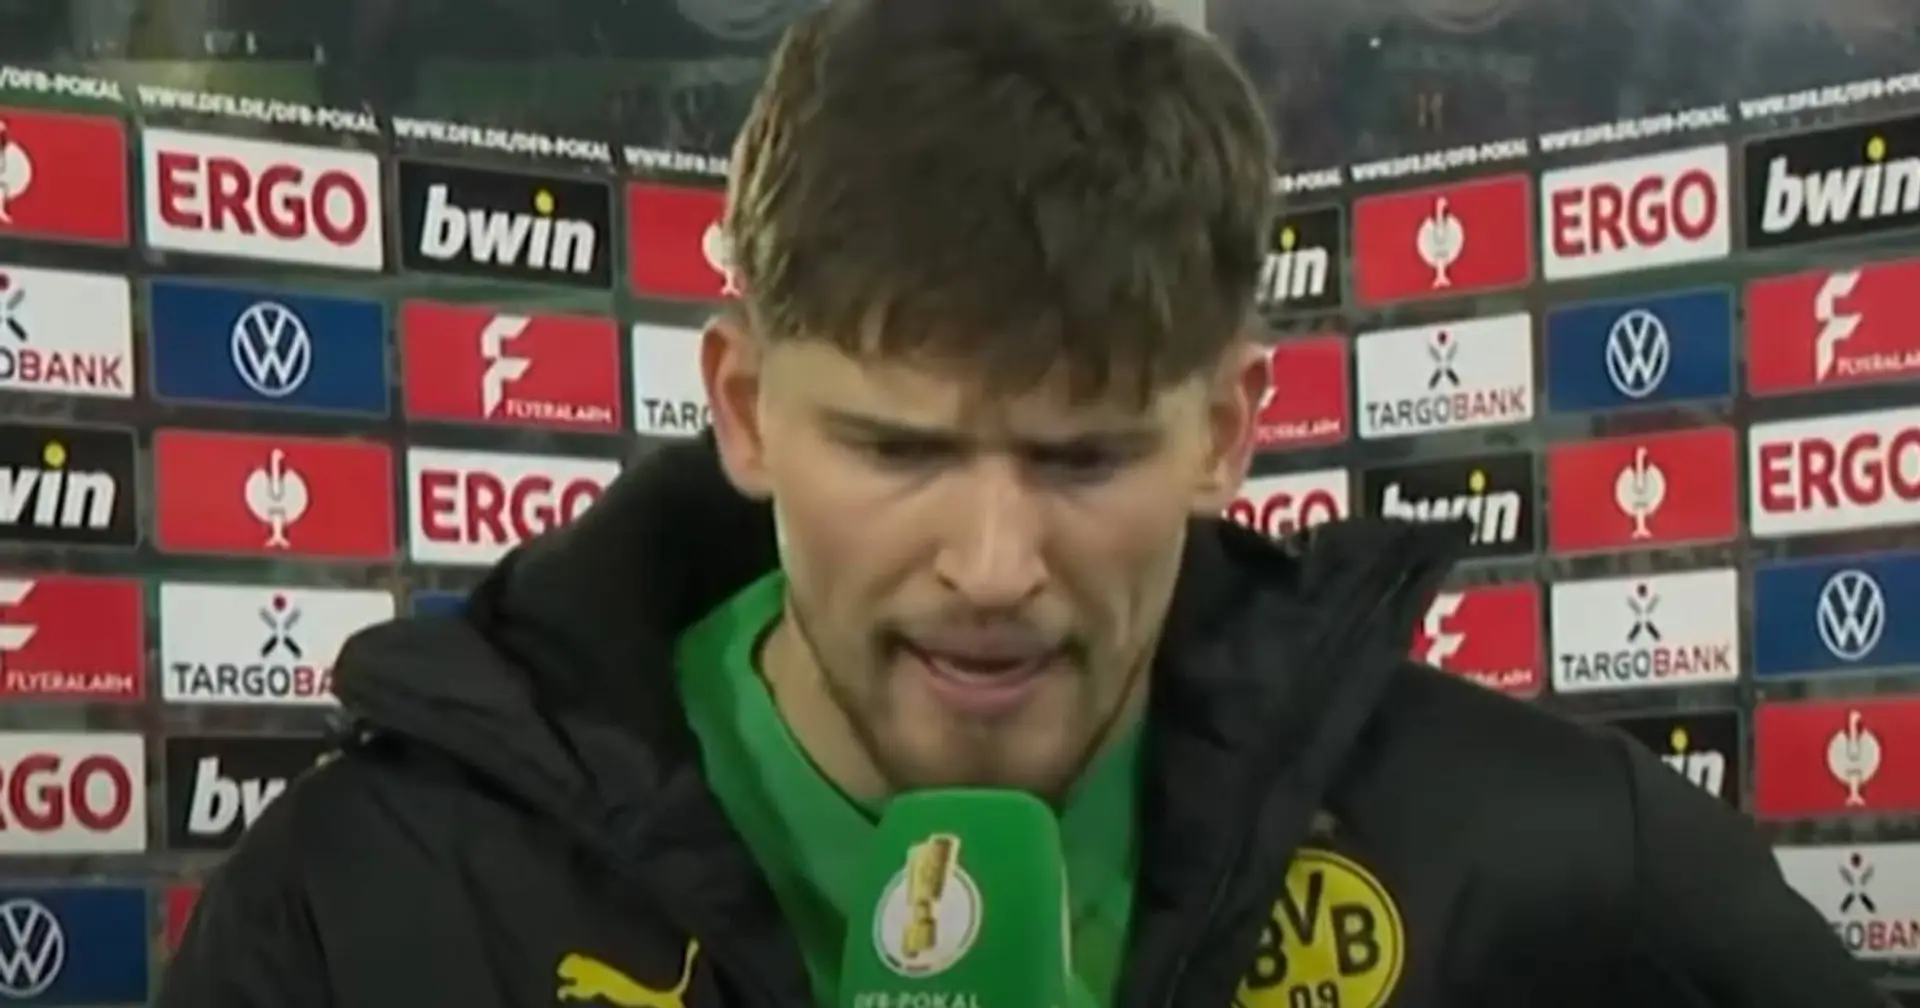 Gregor Kobel ärgert sich extrem über das Pokal-Aus: "Ich bin mega angep*sst"